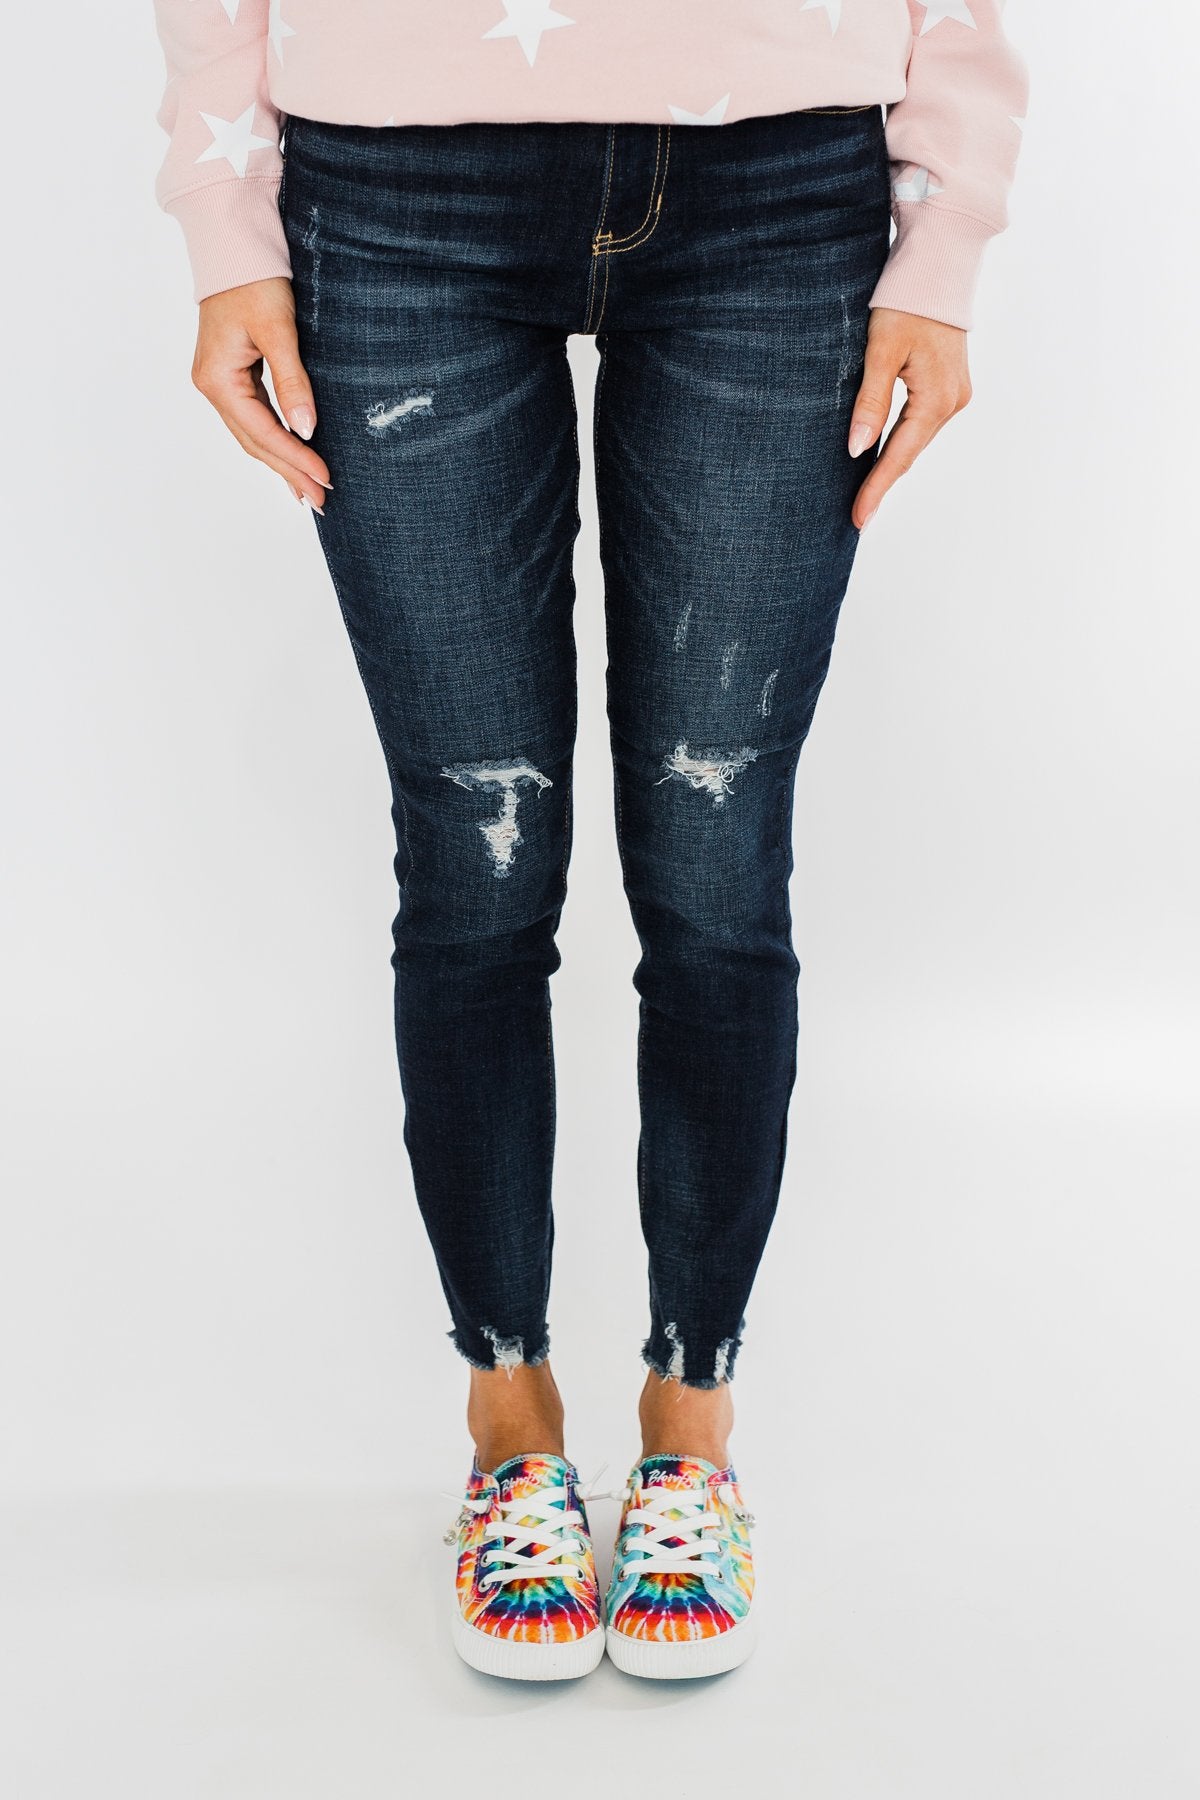 YMI Raw Hem Skinny Jeans- Cassandra Wash